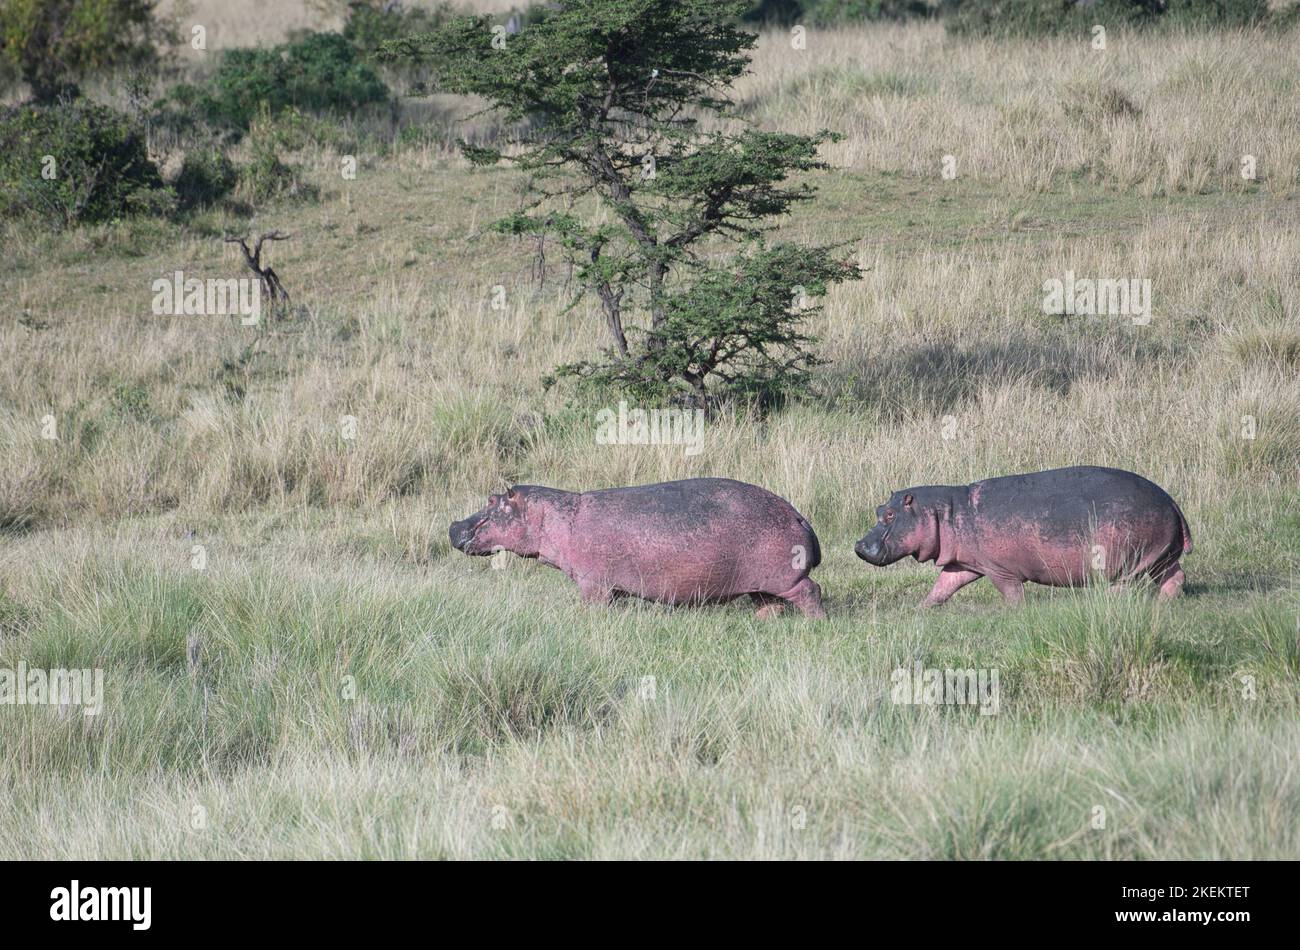 Two hippopotami (Hippopotamus amphibius) returning to water after grazing on land Stock Photo